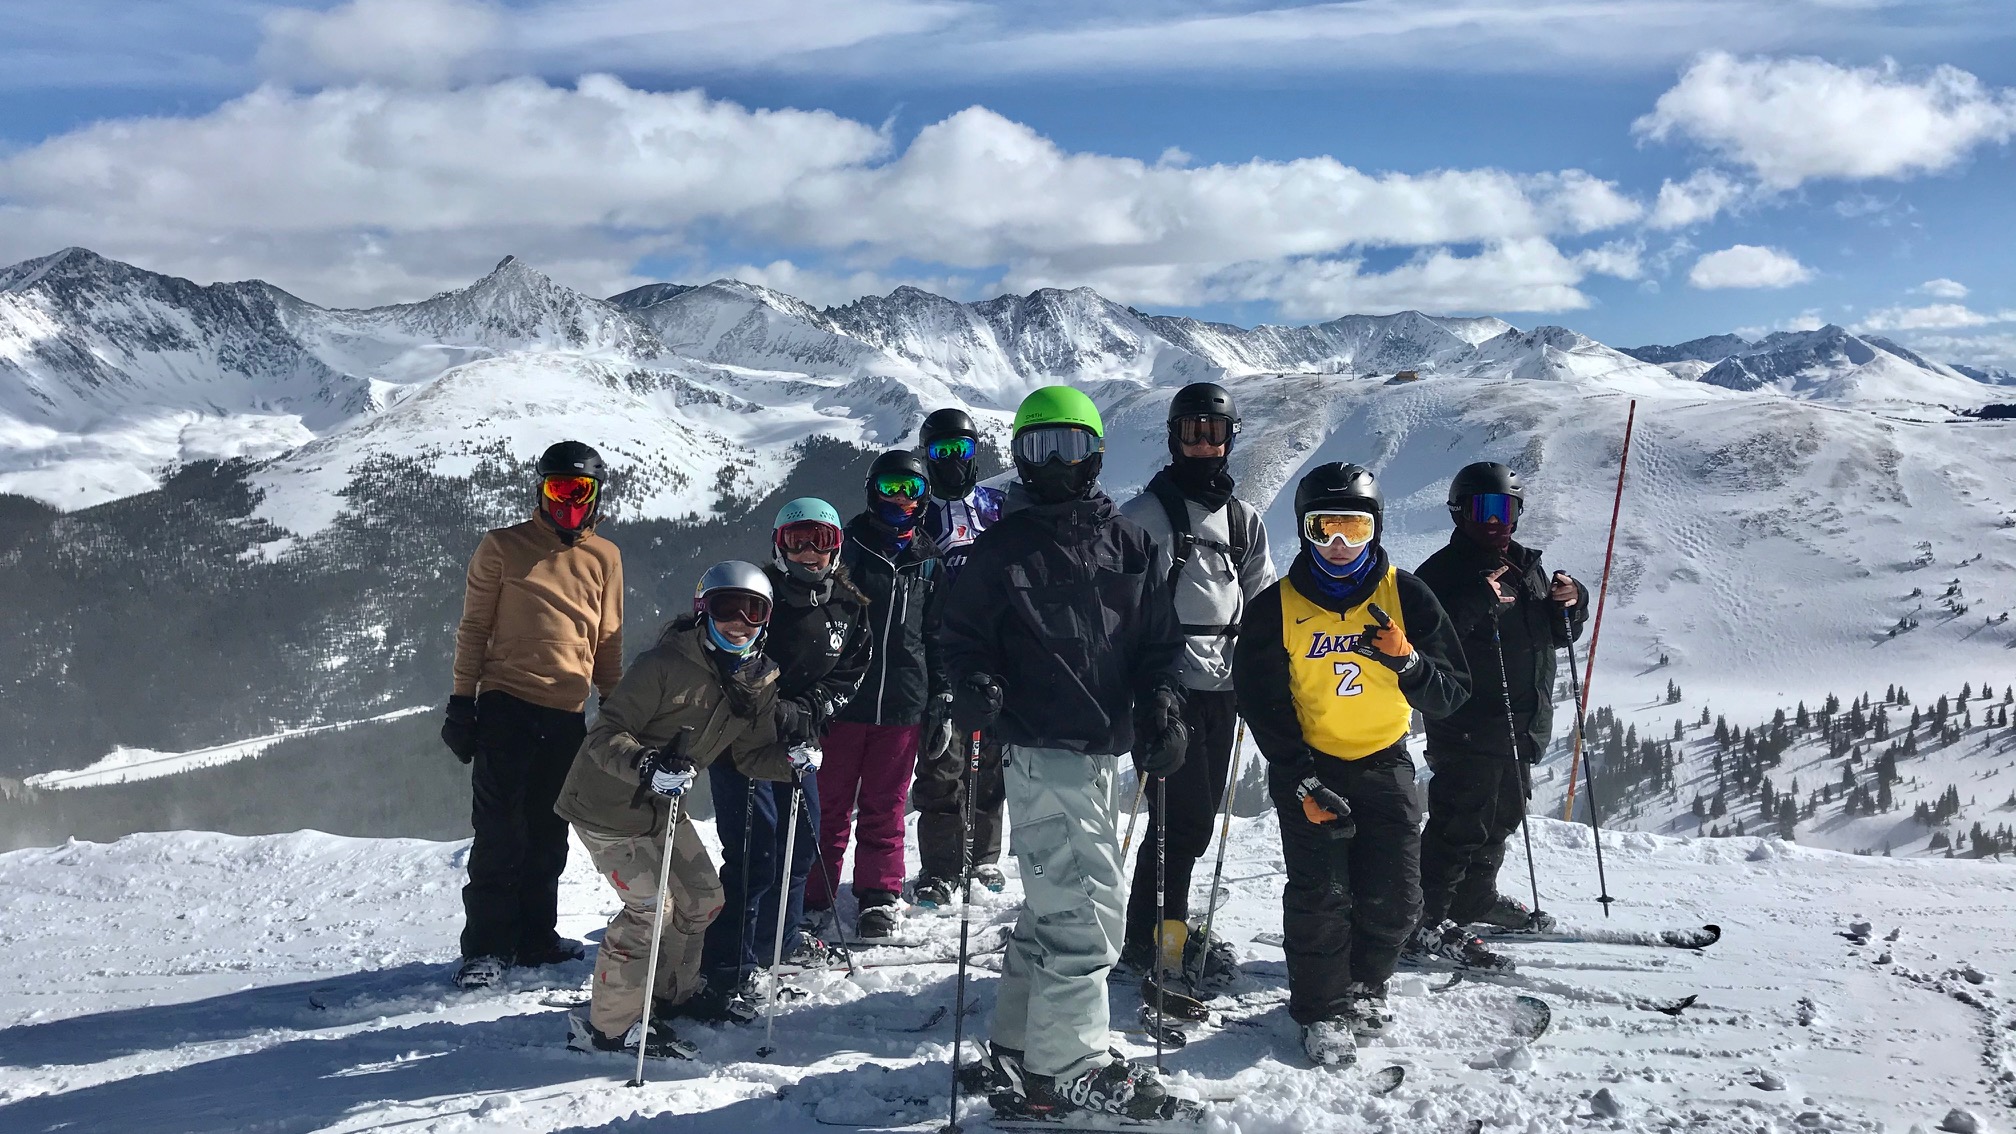 Campion students enjoy Colorado winter fun with skiing on three mountains